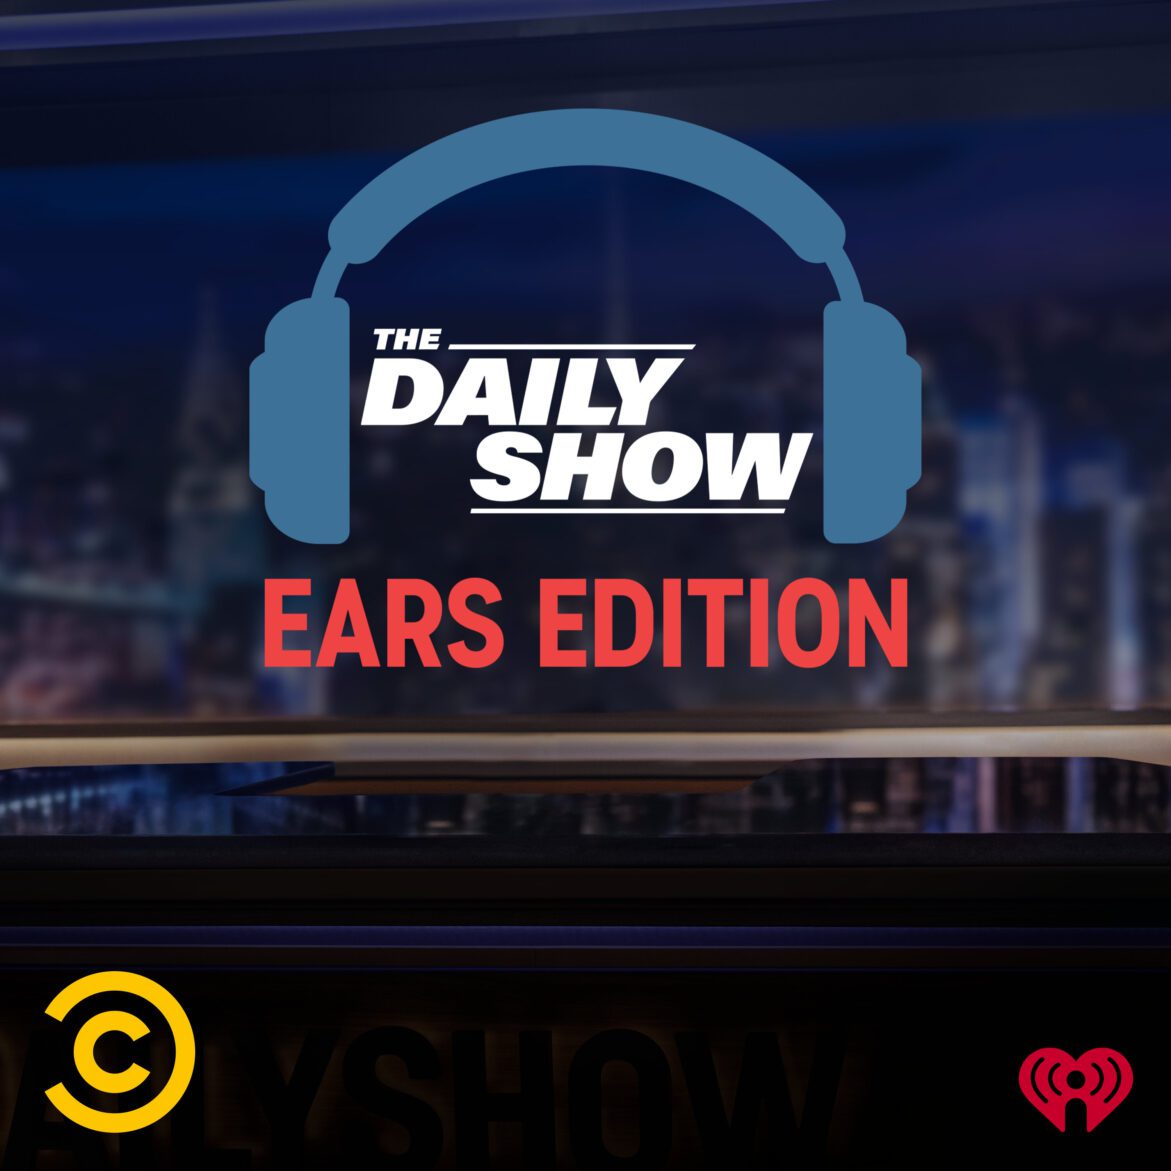 Black Podcasting - The Daily Show with Trevor Noah - Rap Lyrics as Evidence